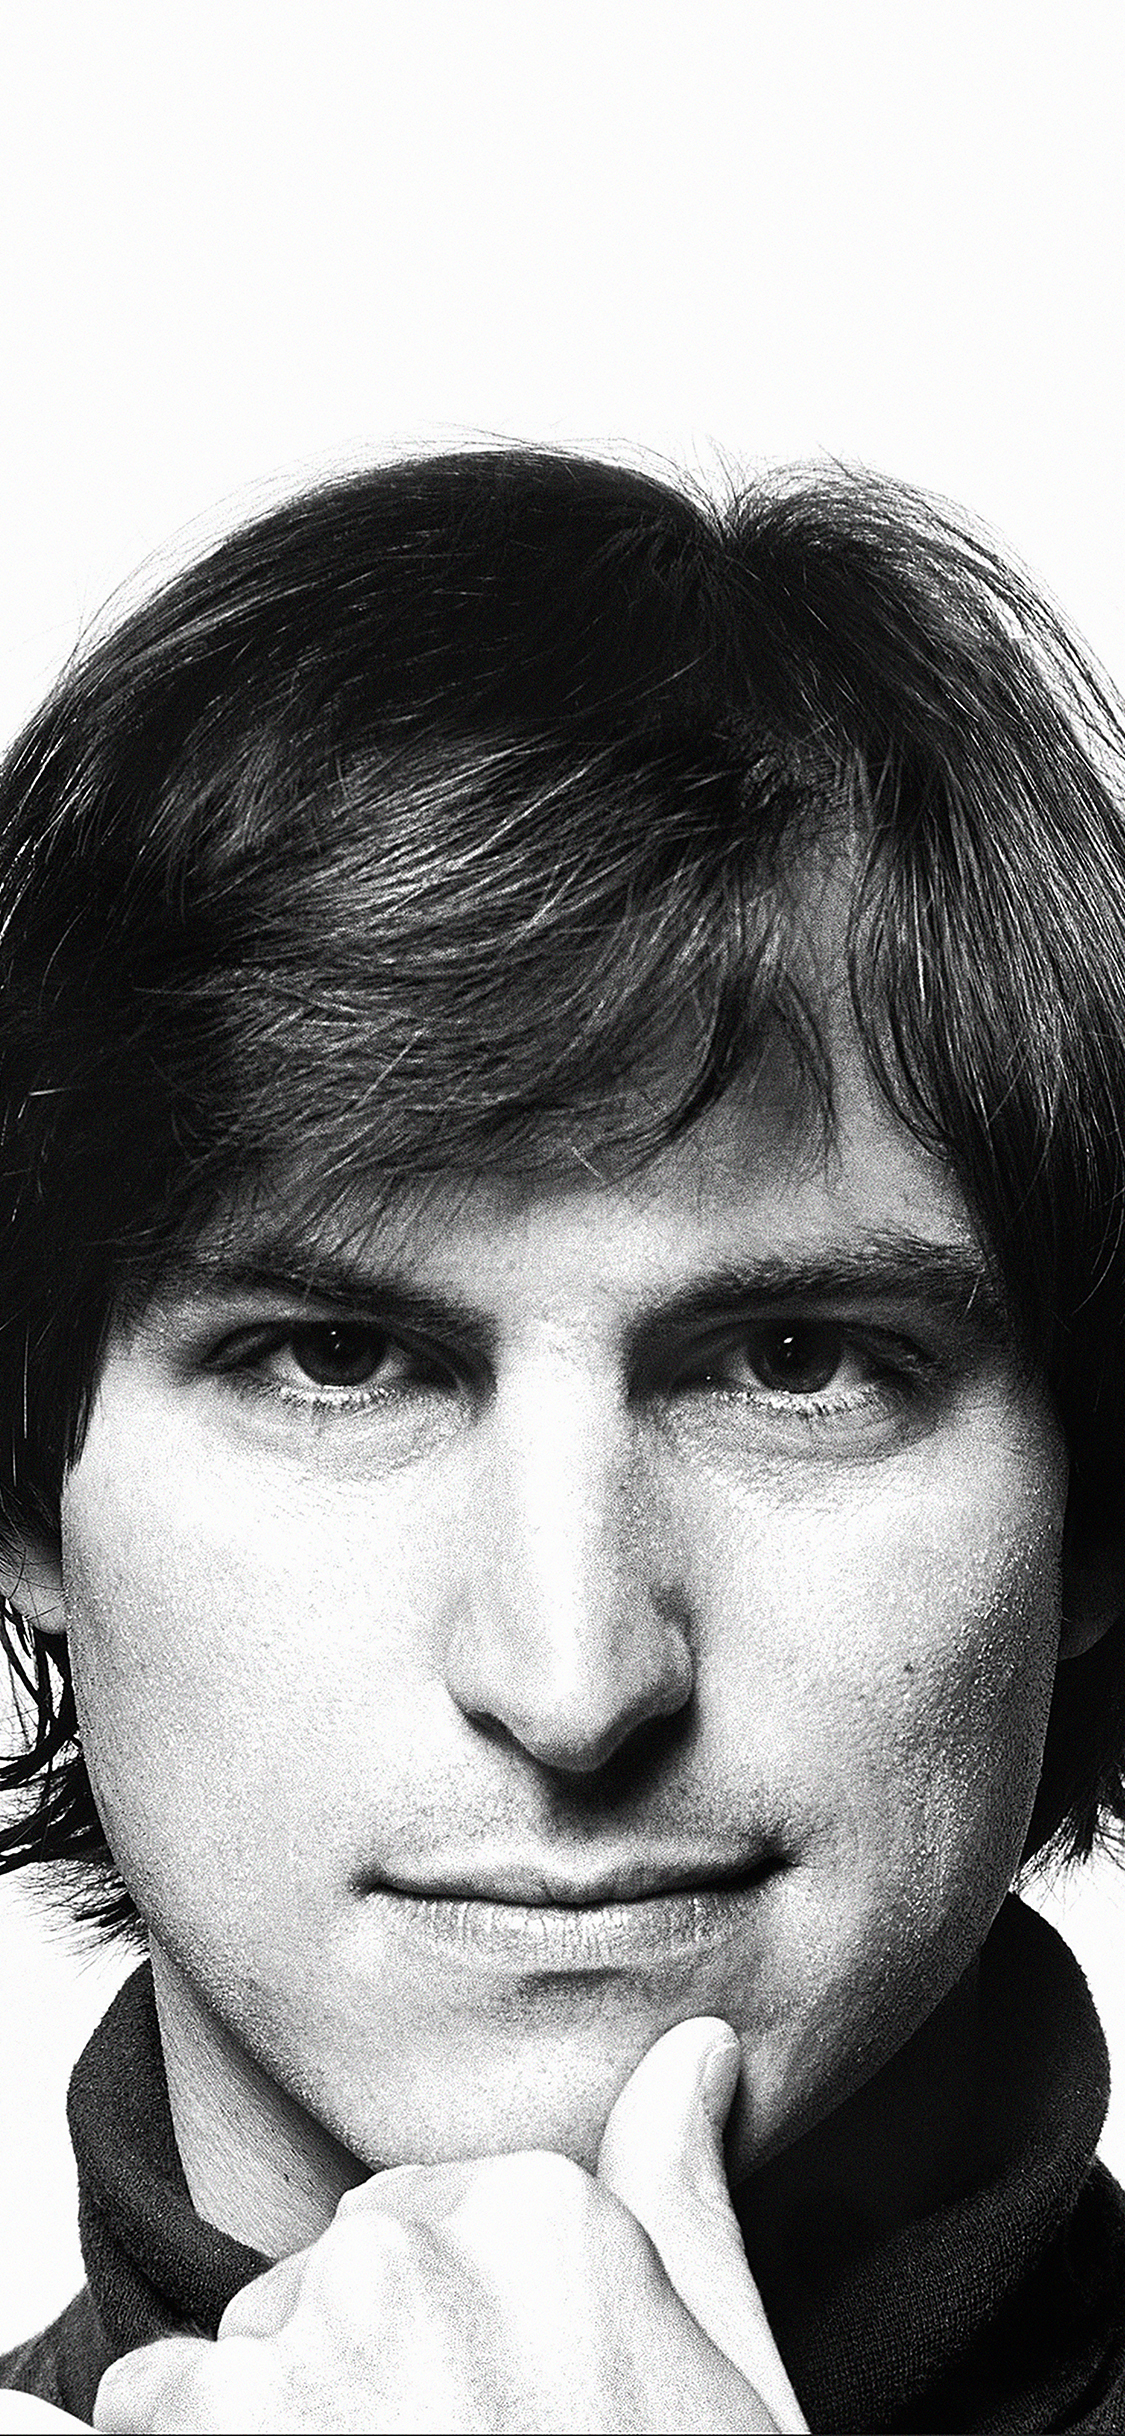 Young Steve Jobs Wallpaper Iphone - HD Wallpaper 